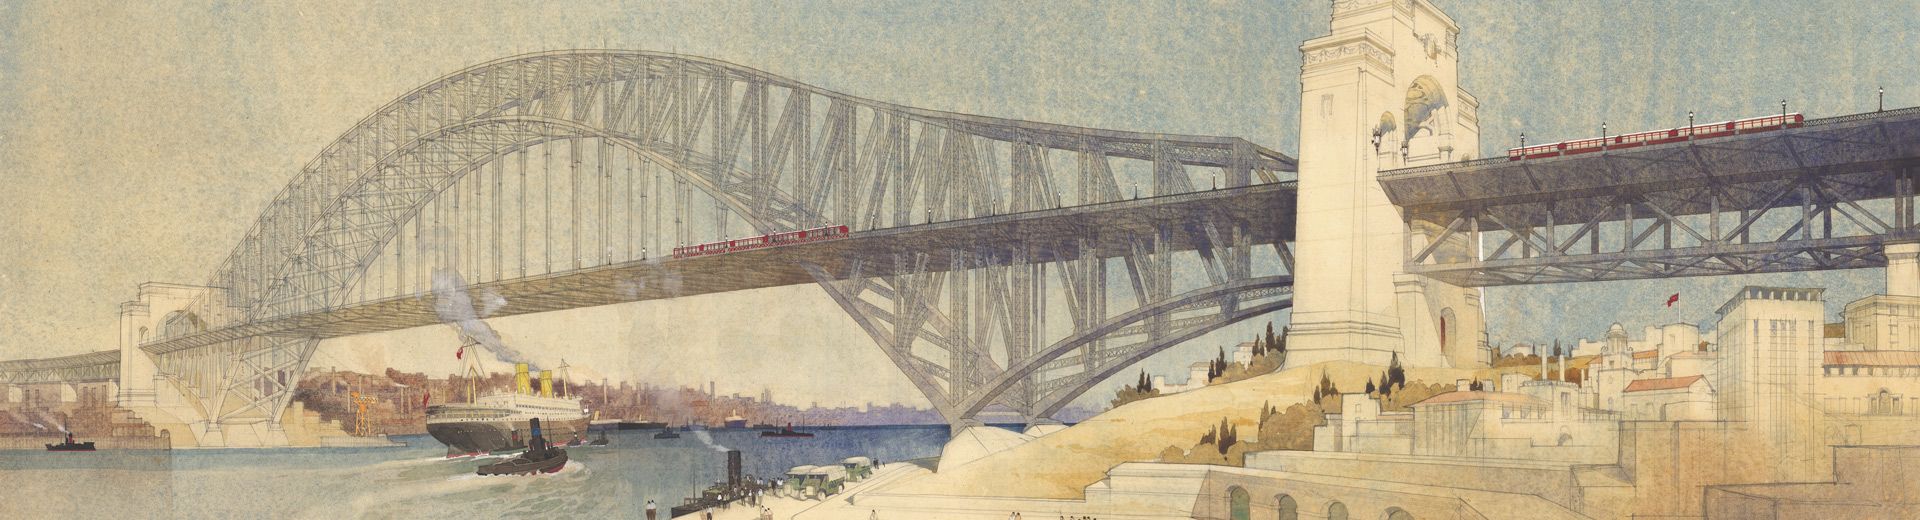 c.1923 coloured sketch of alternative cantilever Sydney Harbour Bridge